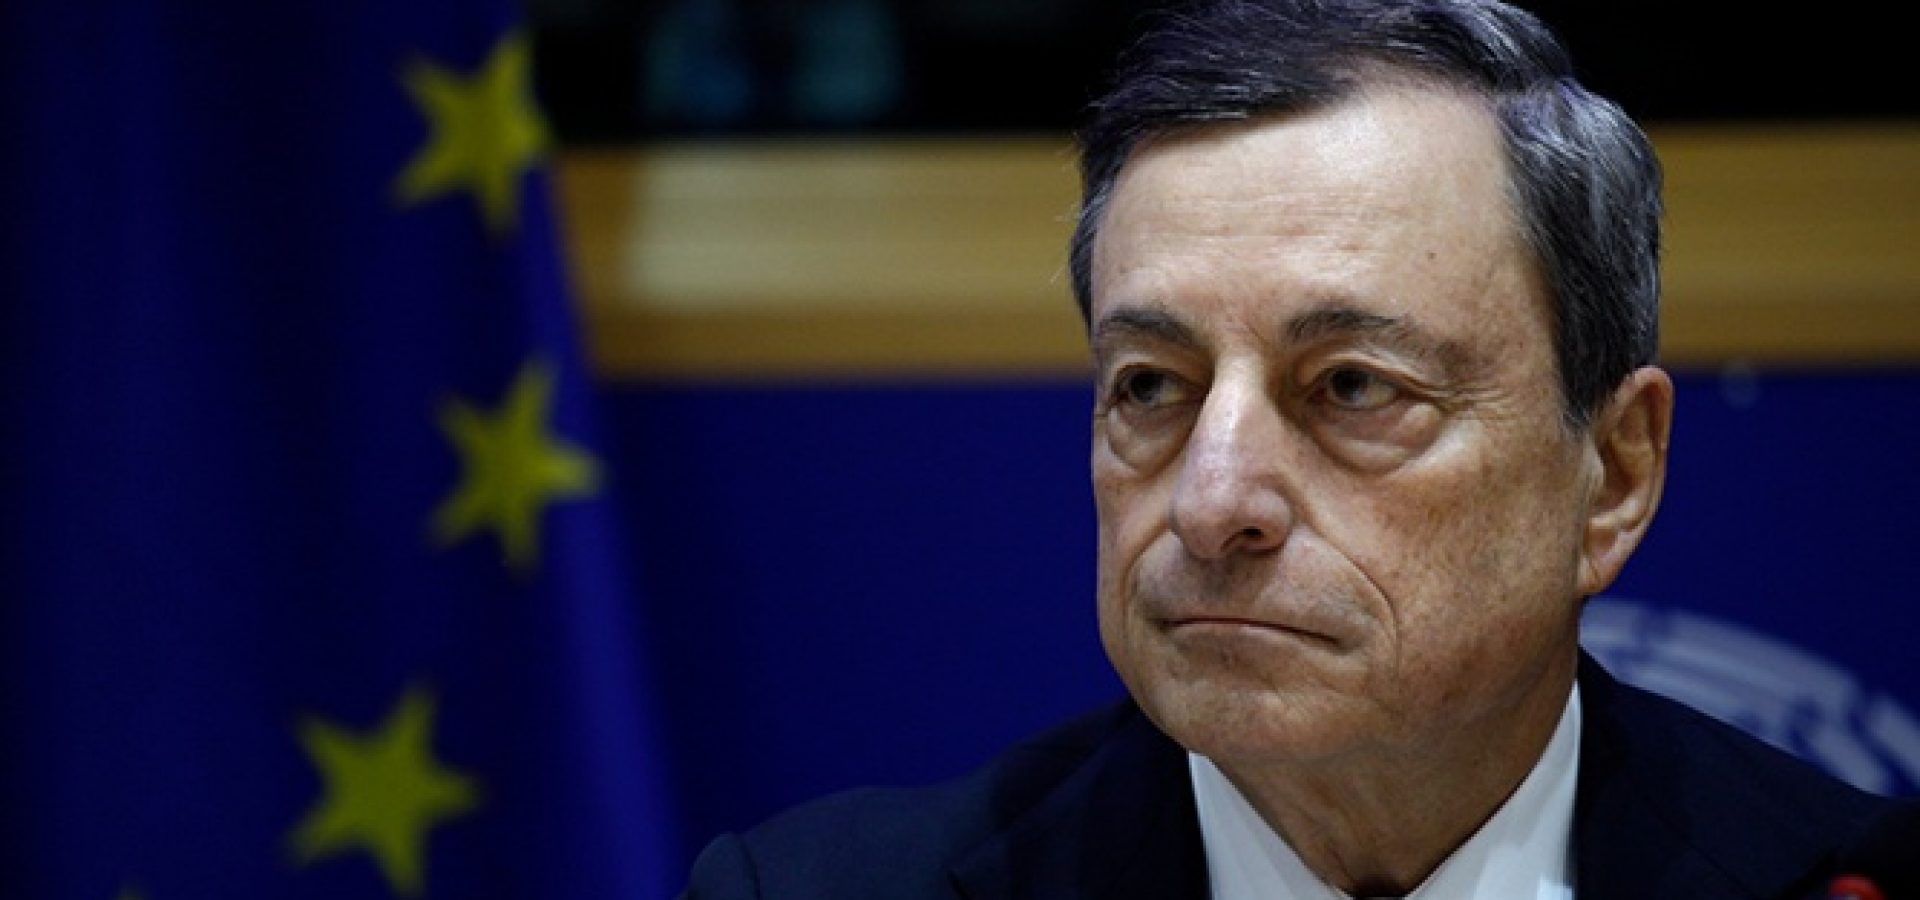 Wibest – ECB: European Central Bank’s Mario Draghi